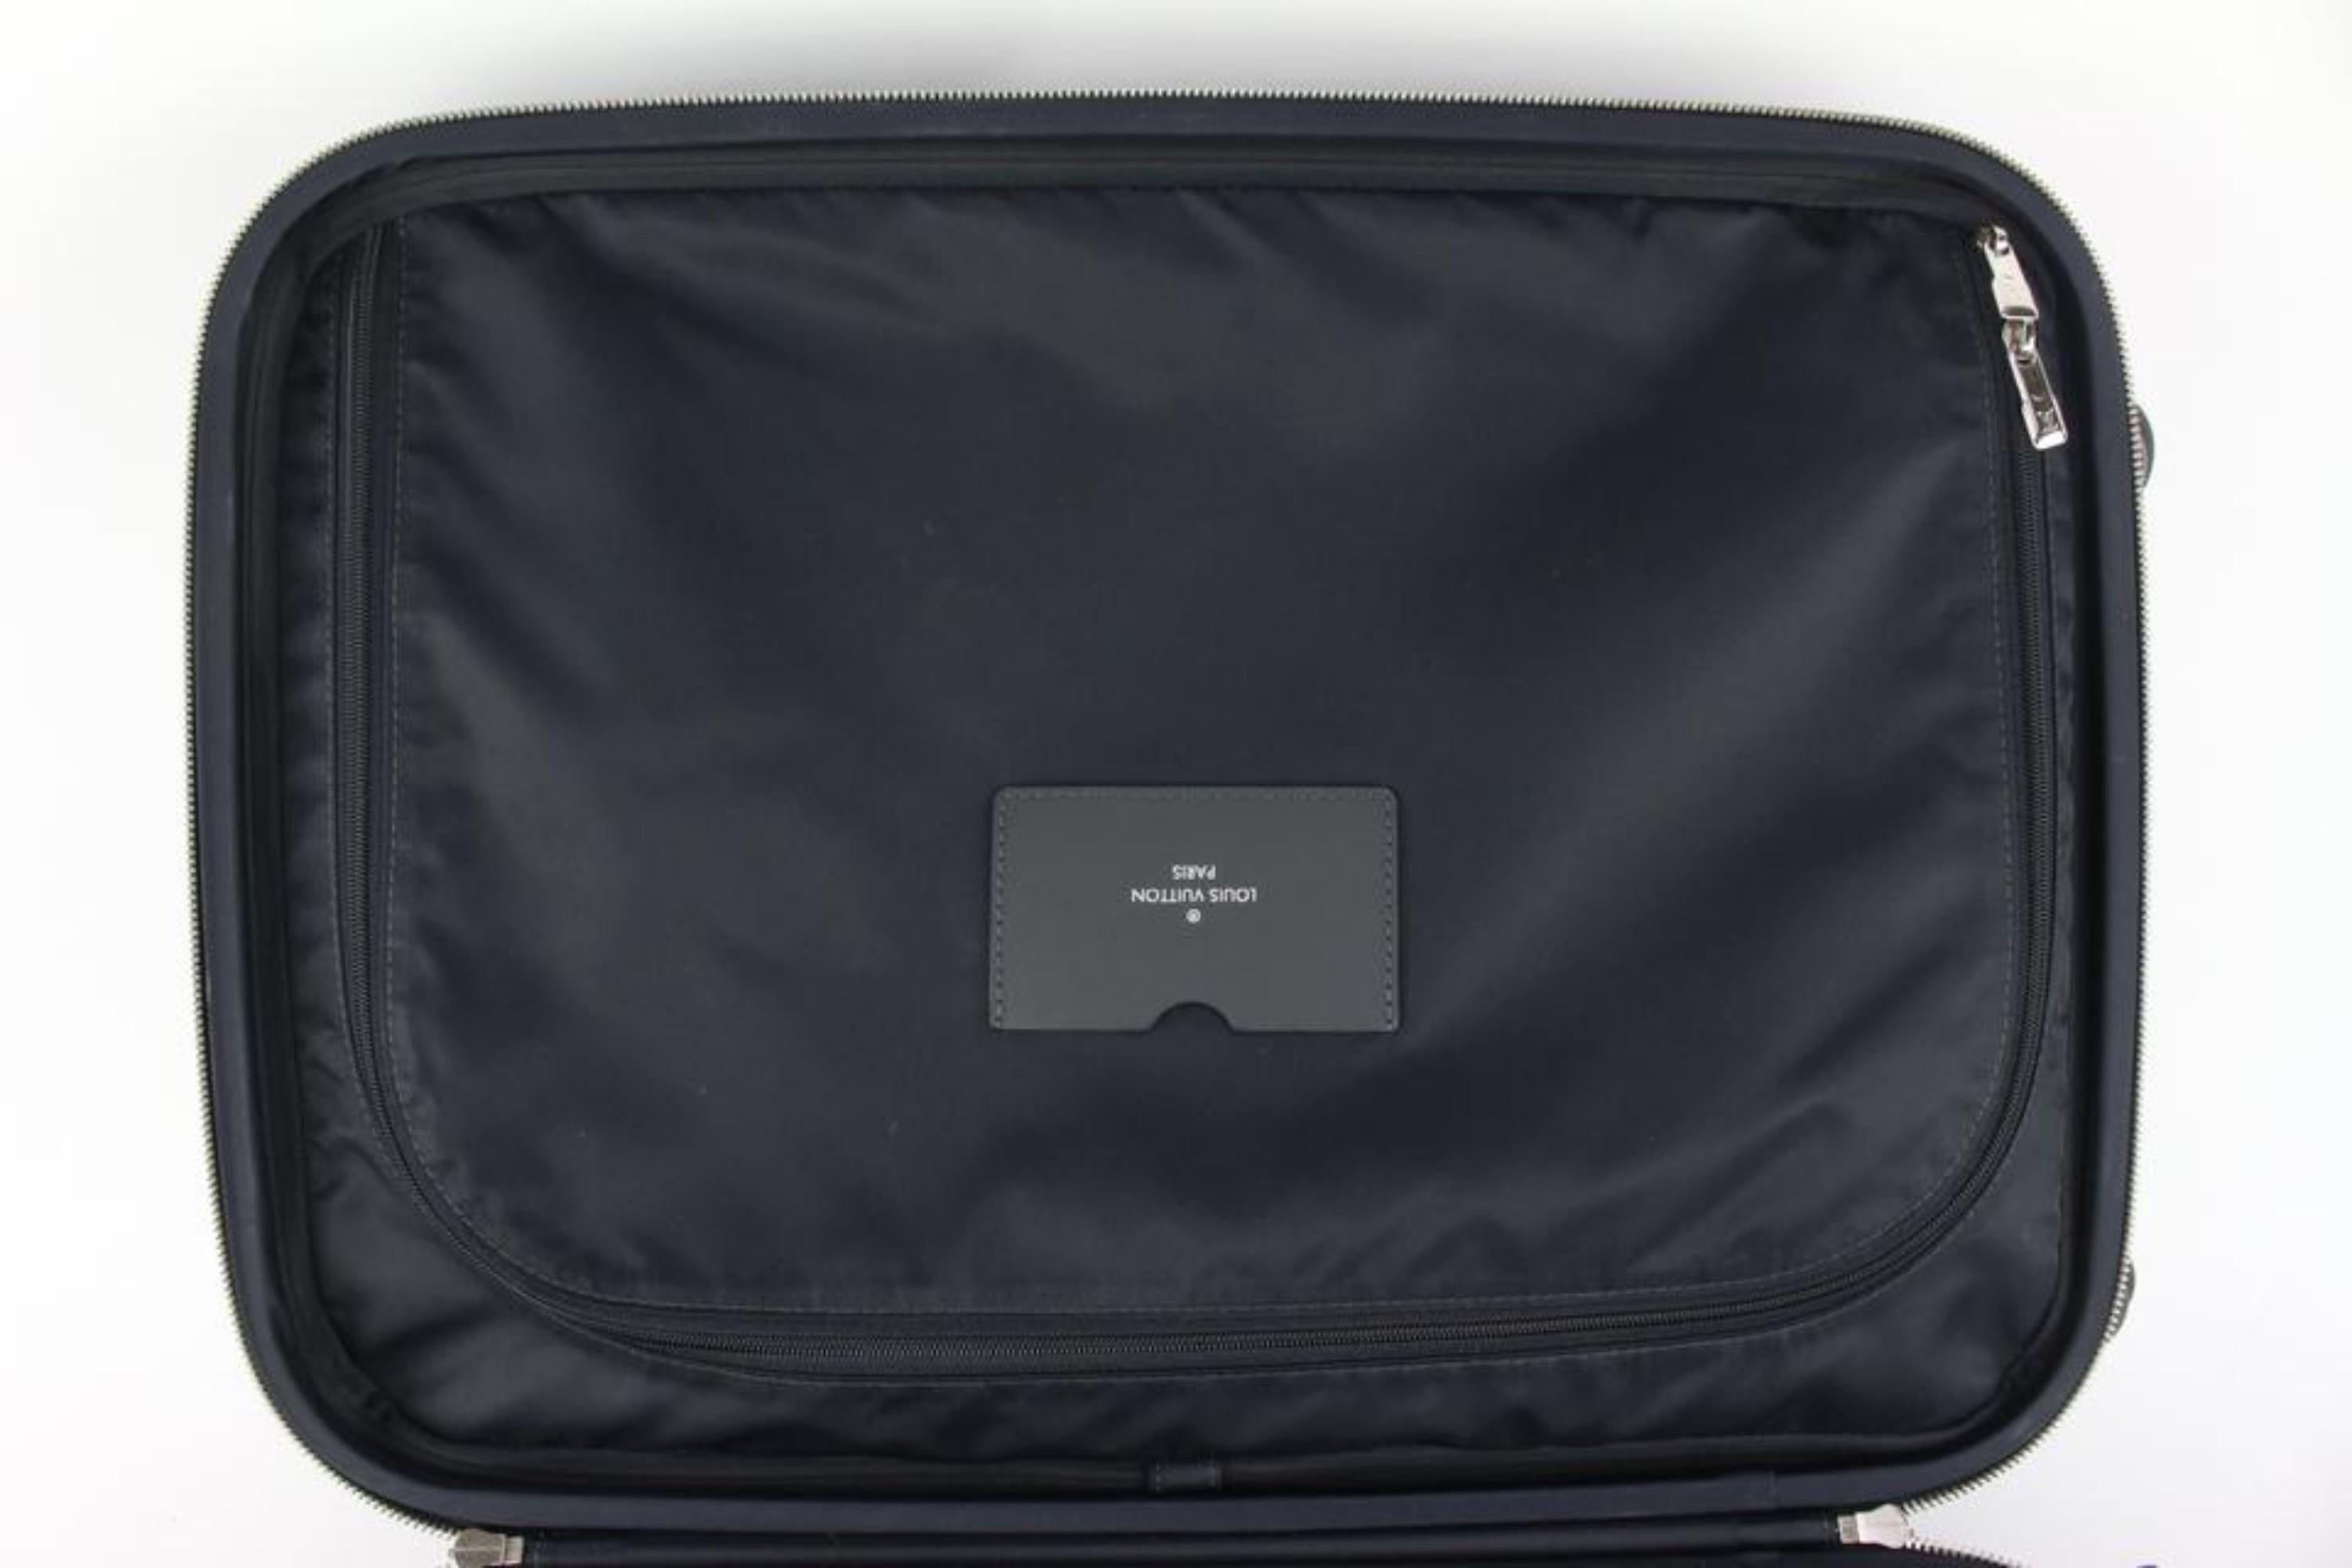 Gray Louis Vuitton Damier Cobalt Zephyr Rolling Luggage Trolley Suitcase 26lz531s For Sale